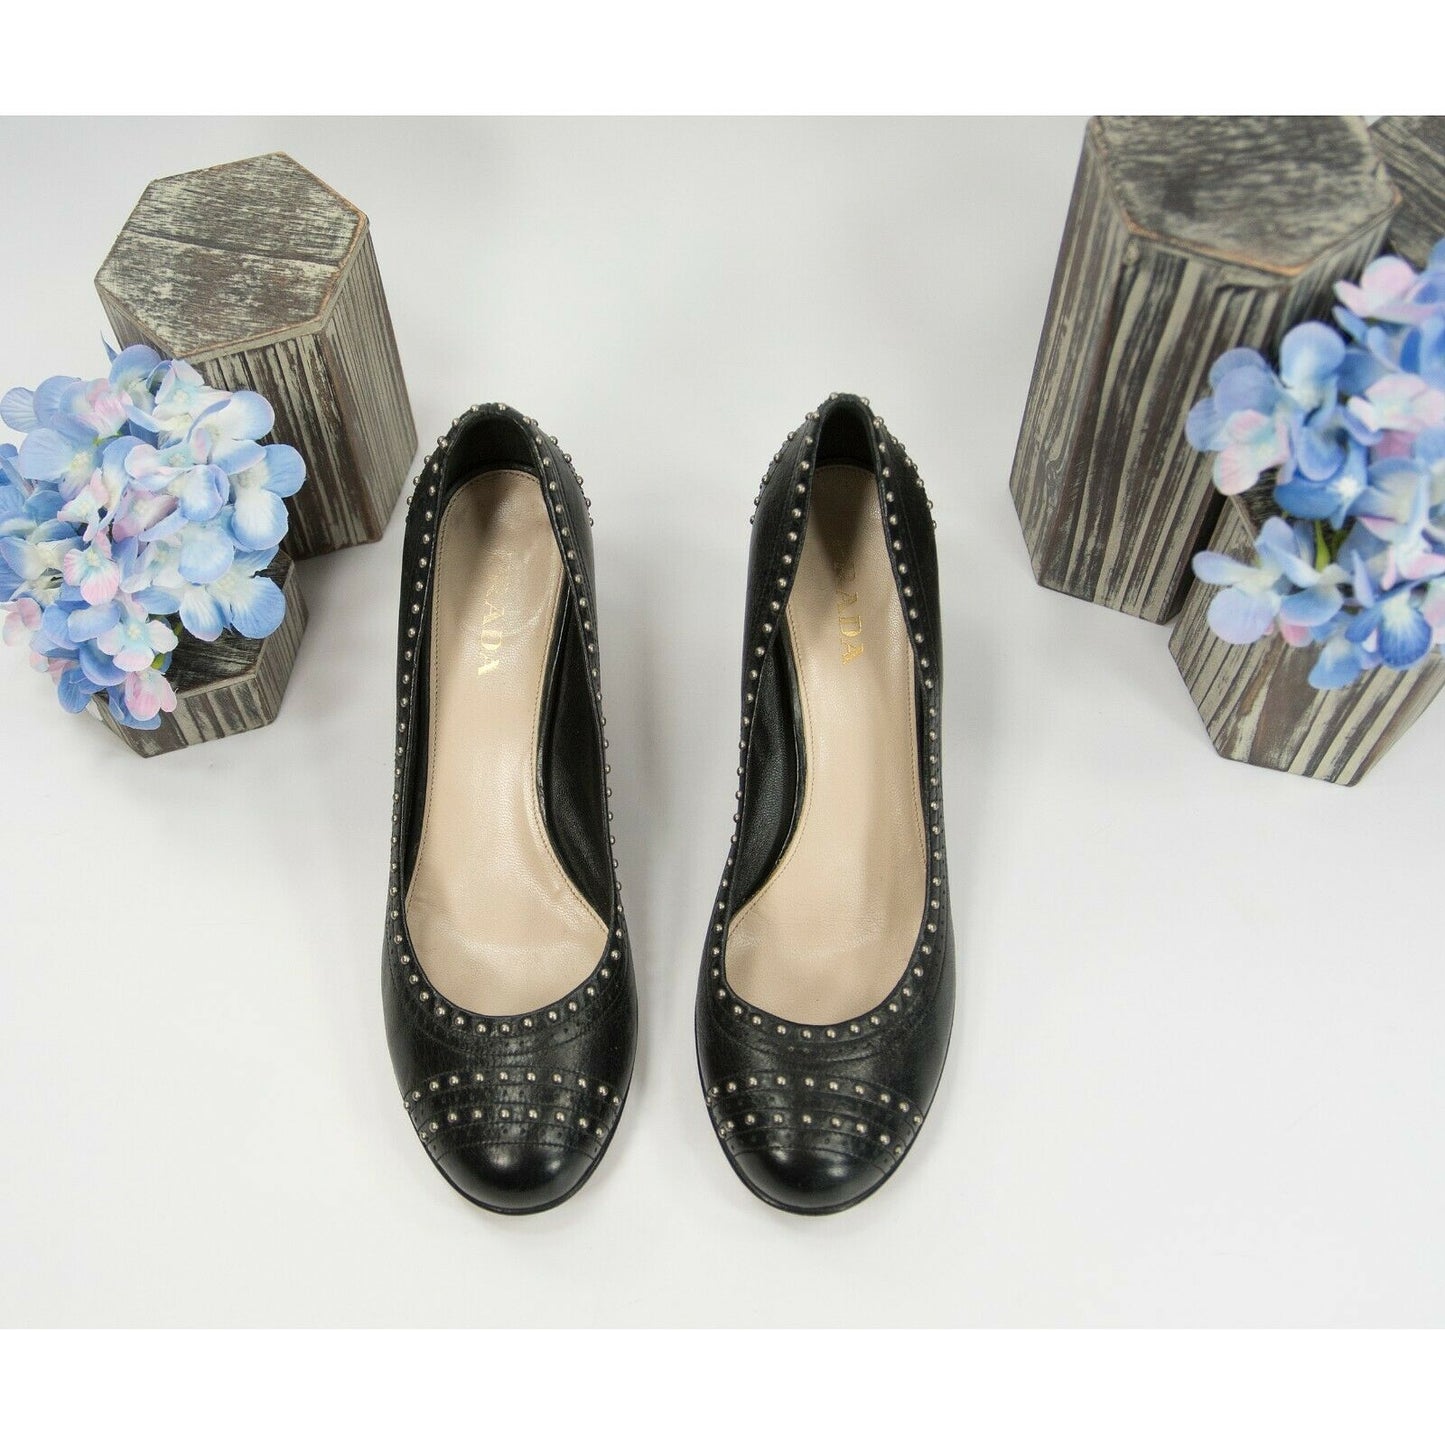 Prada Studded Black Leather Block Heels Shoes Sz 39.5 9.5